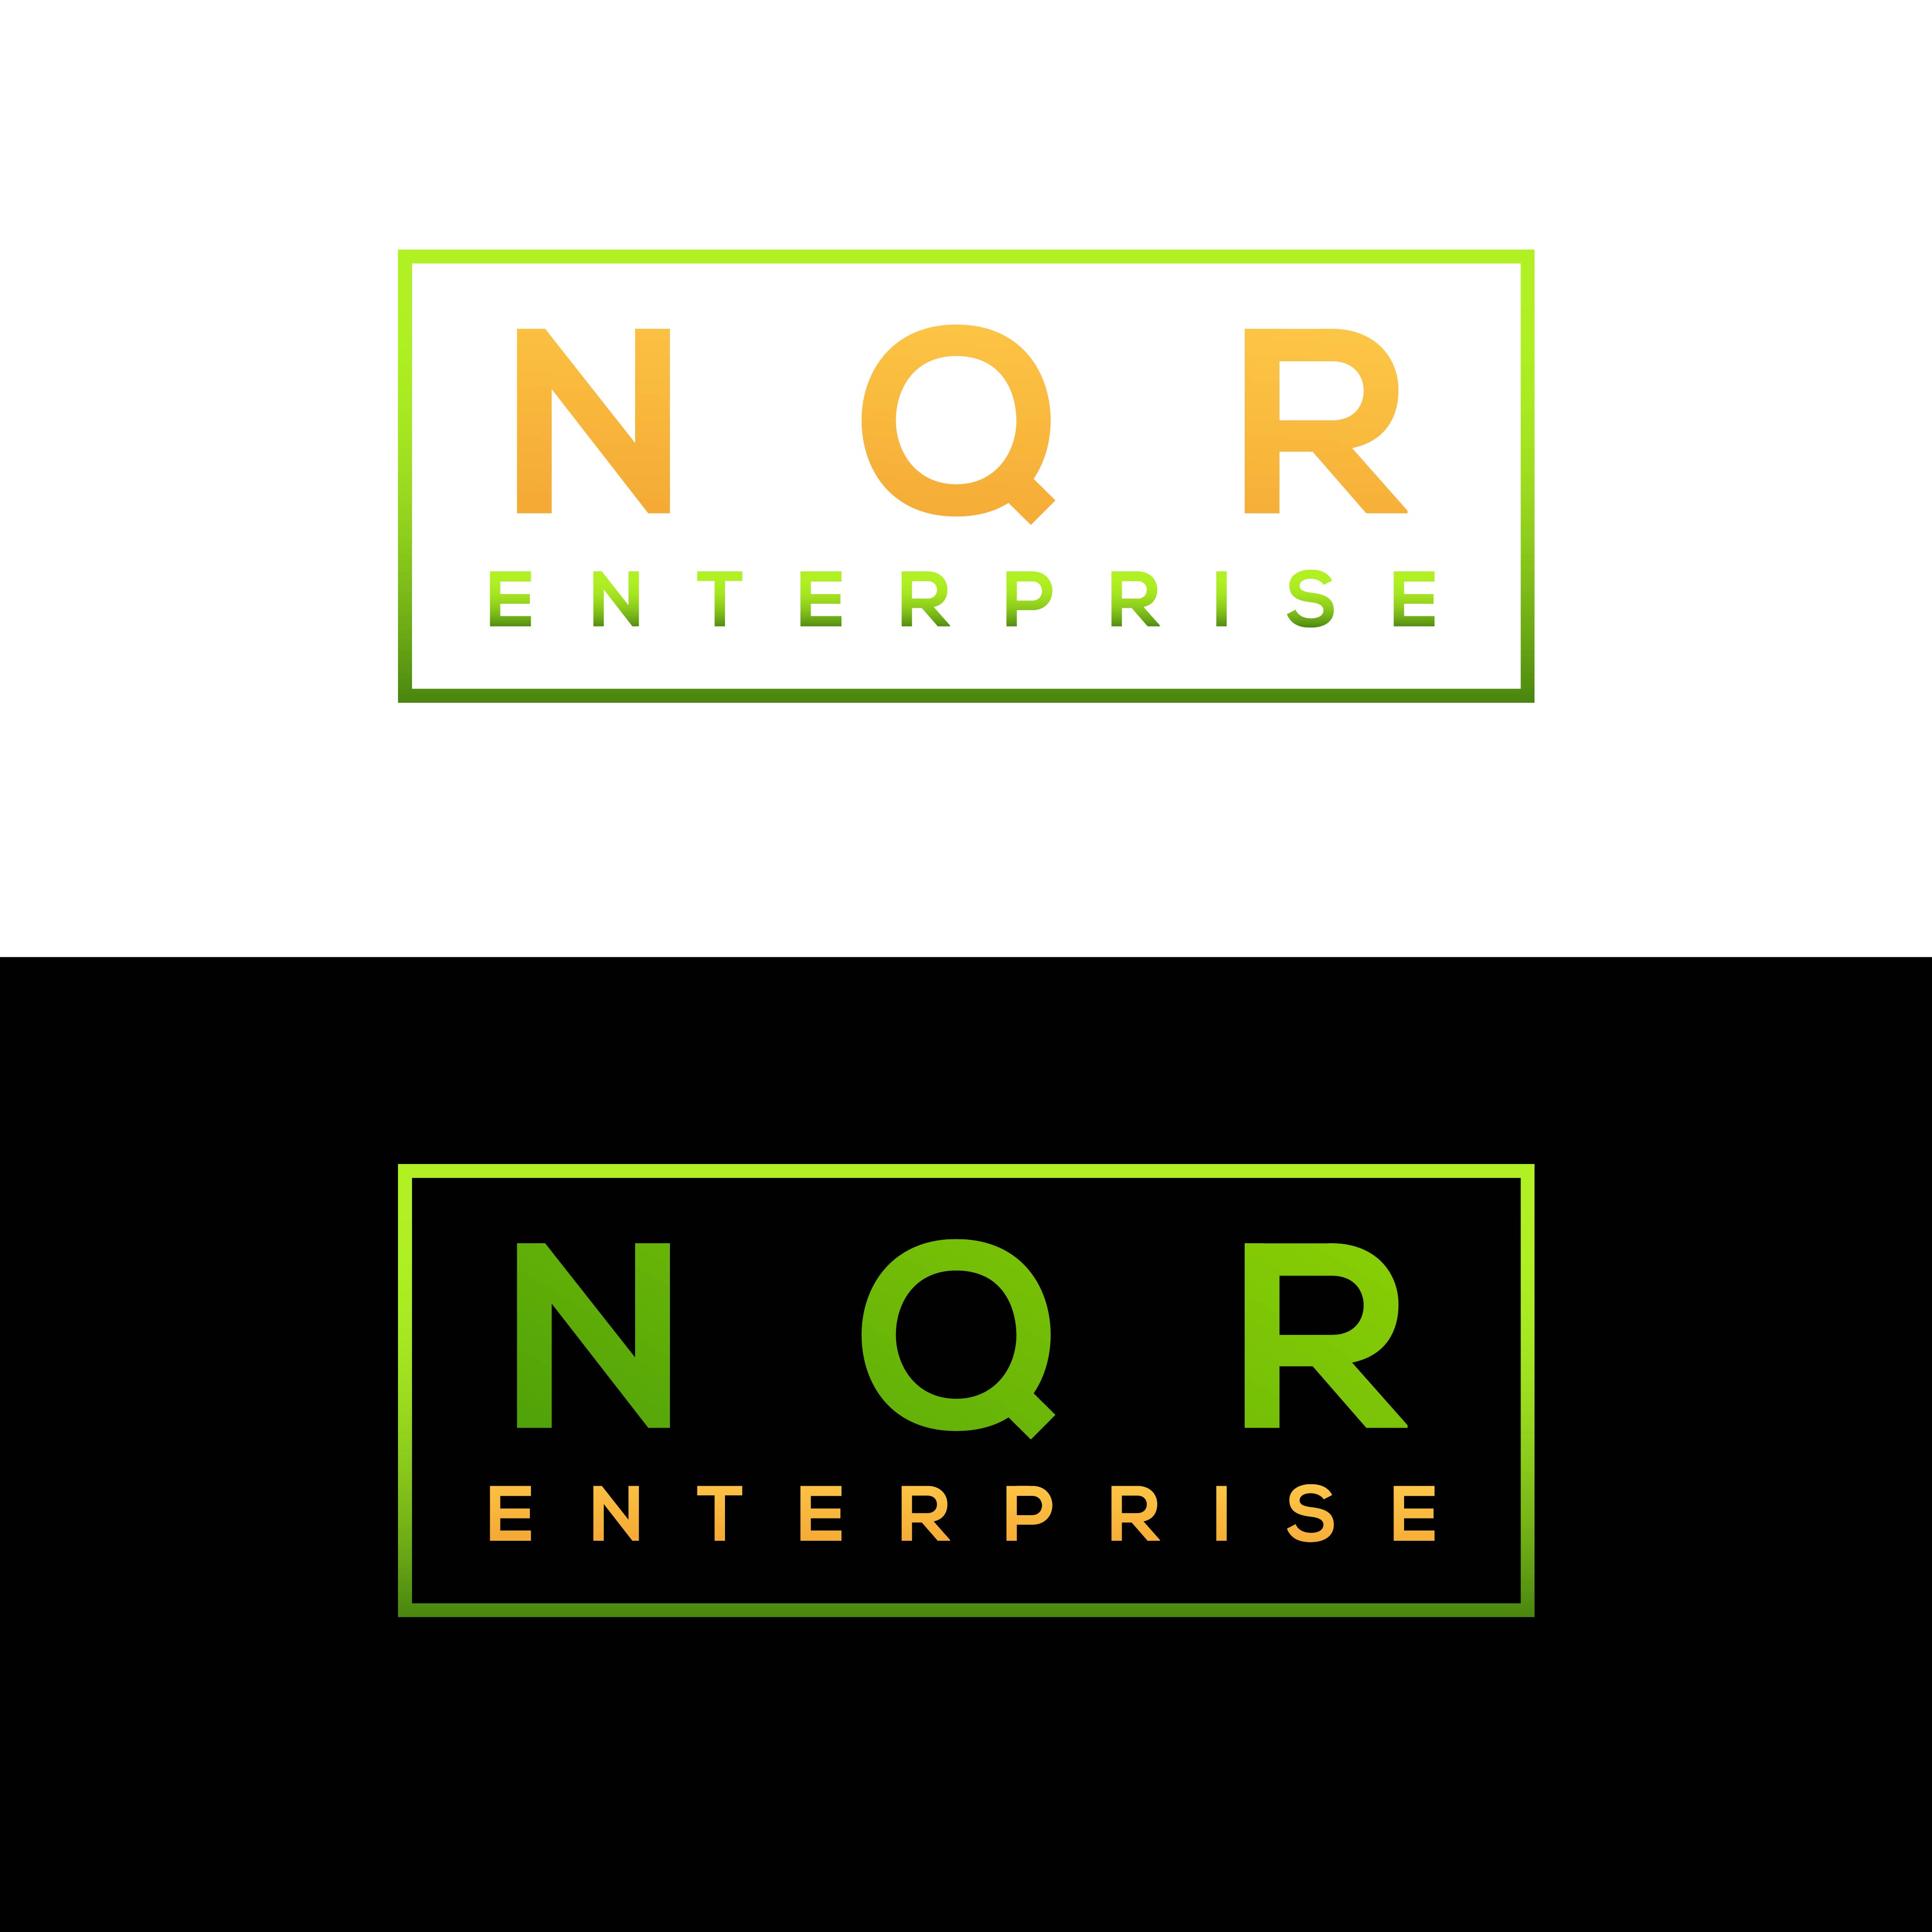 Logo Design entry 2164153 submitted by Pangestika to the Logo Design for NQR Enterprises run by Matt.geinert@gmail.com